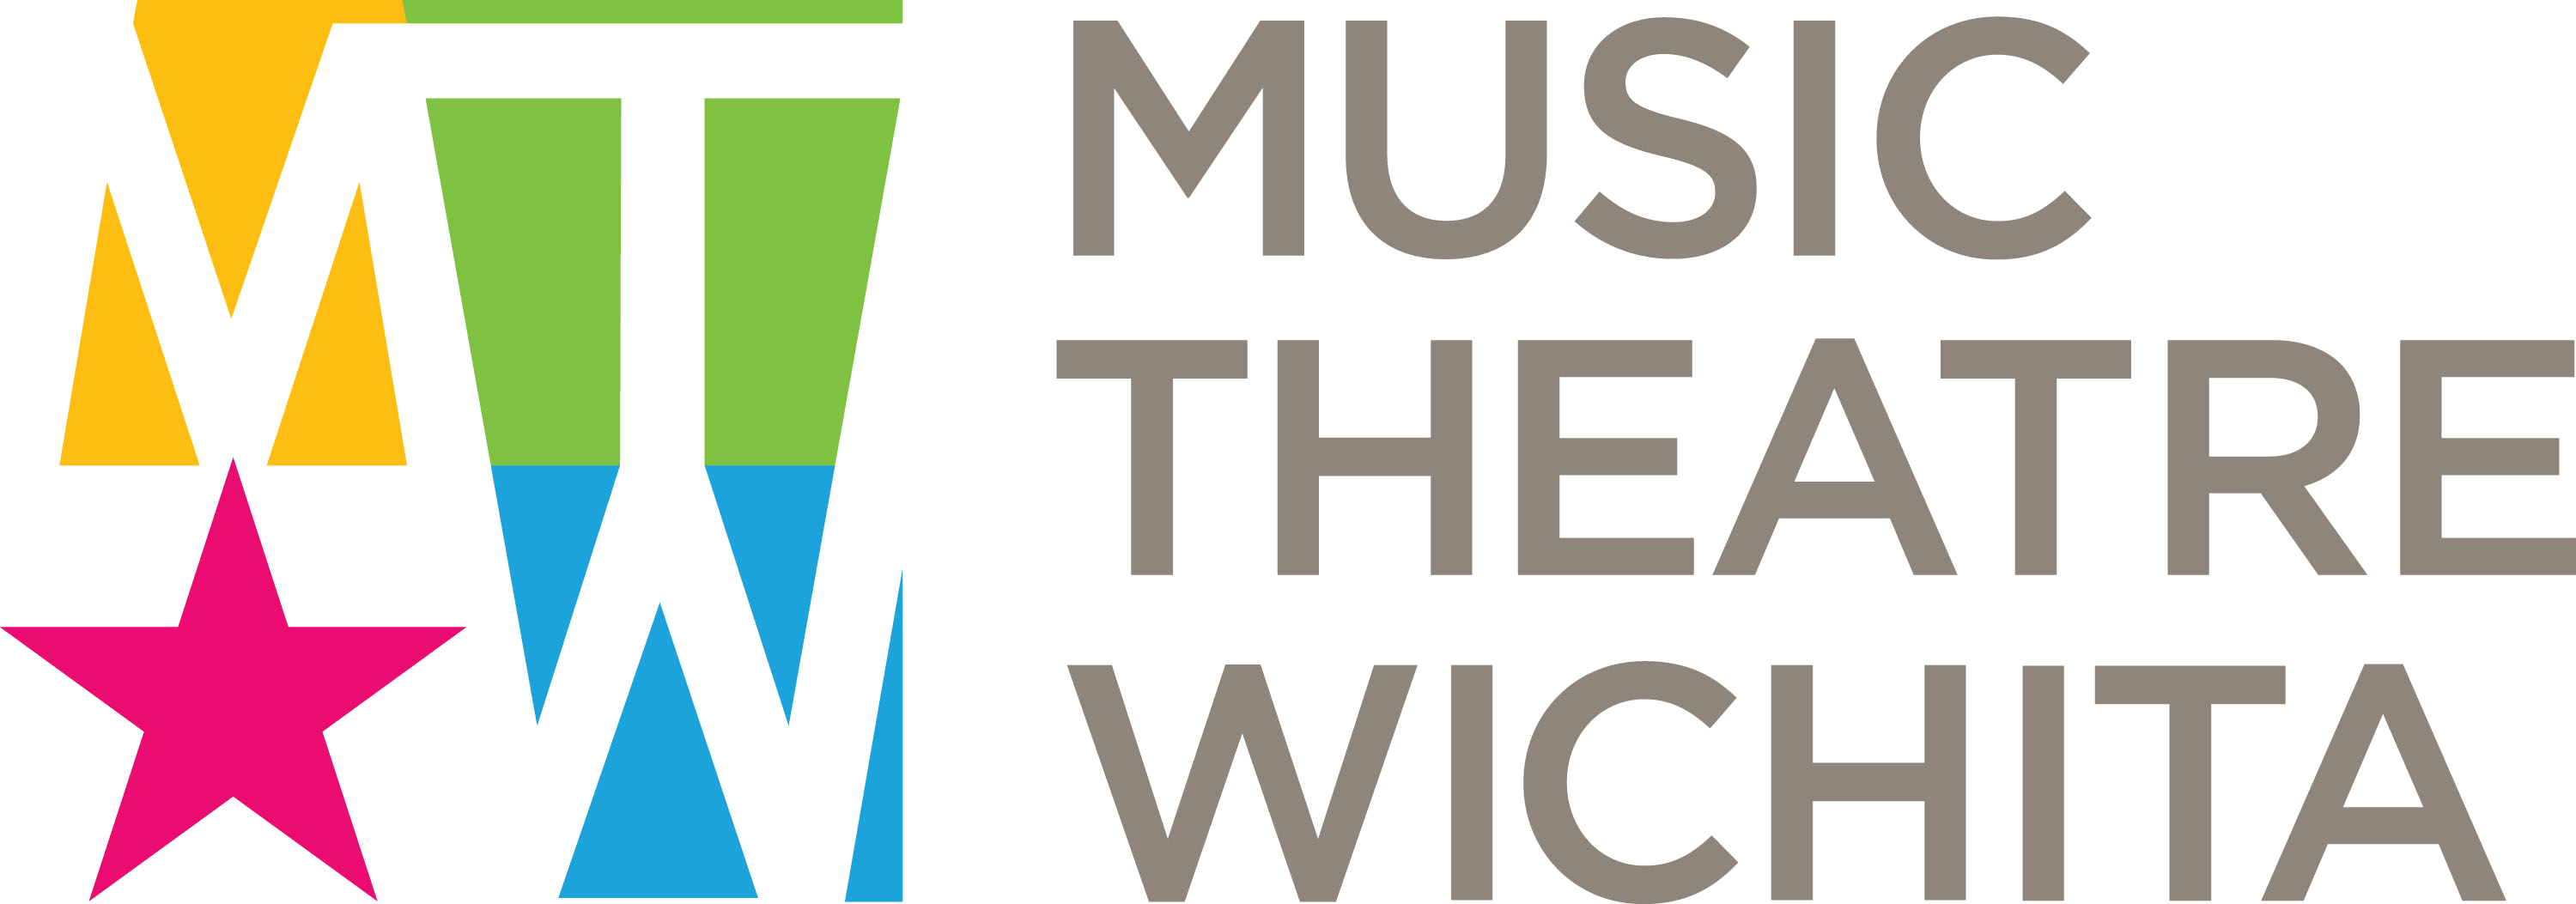 MTWichita logo